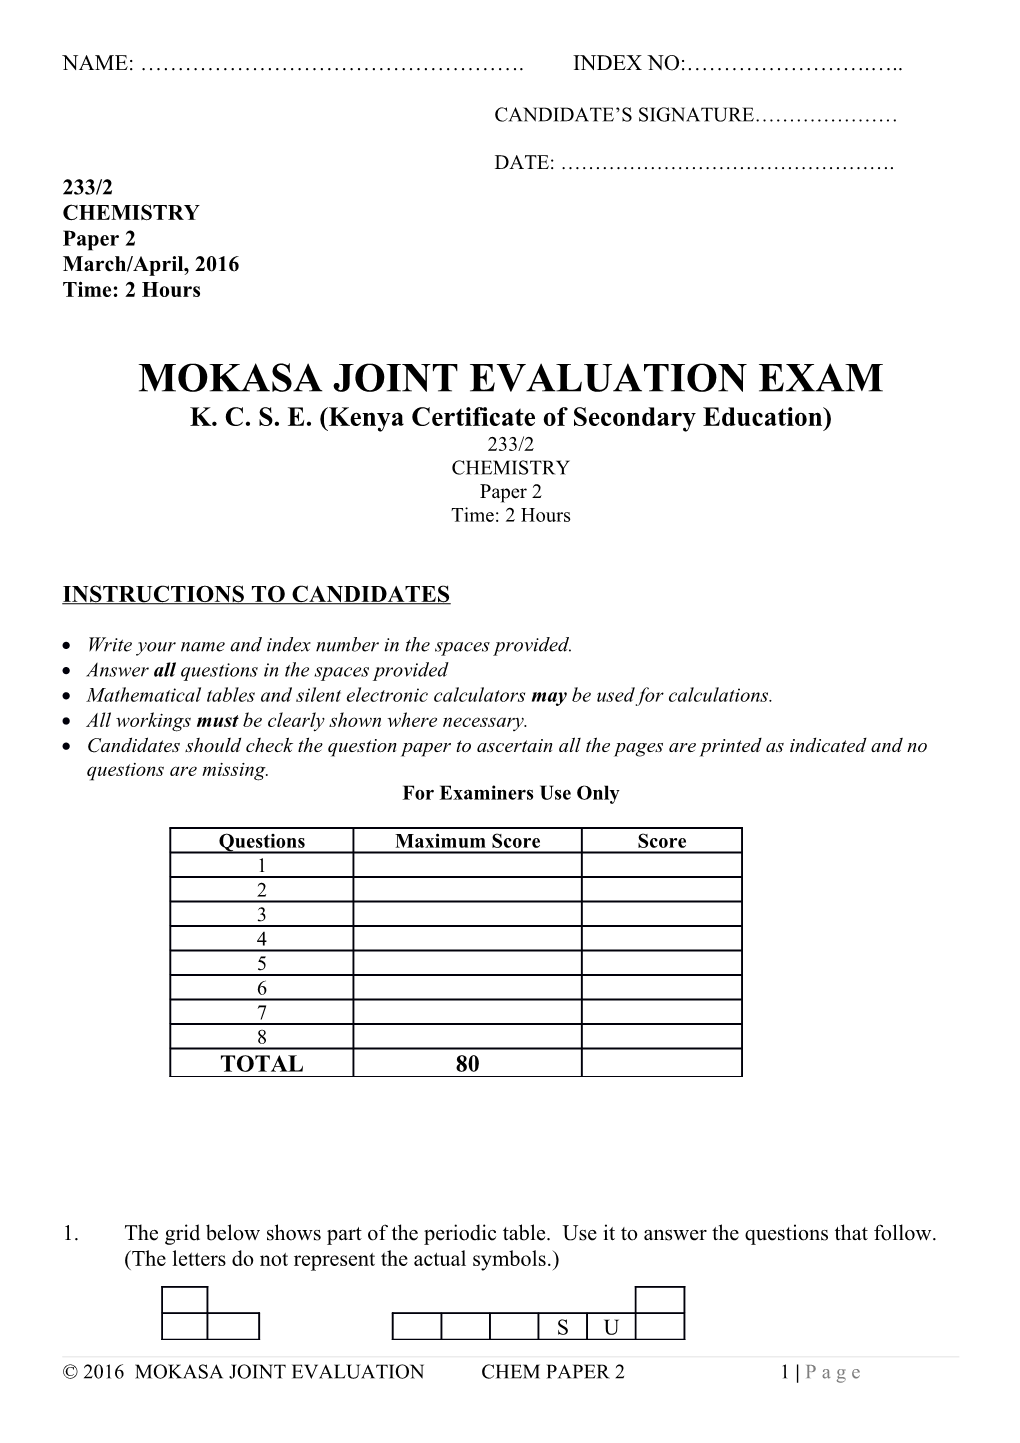 Mokasa Joint Evaluation Exam